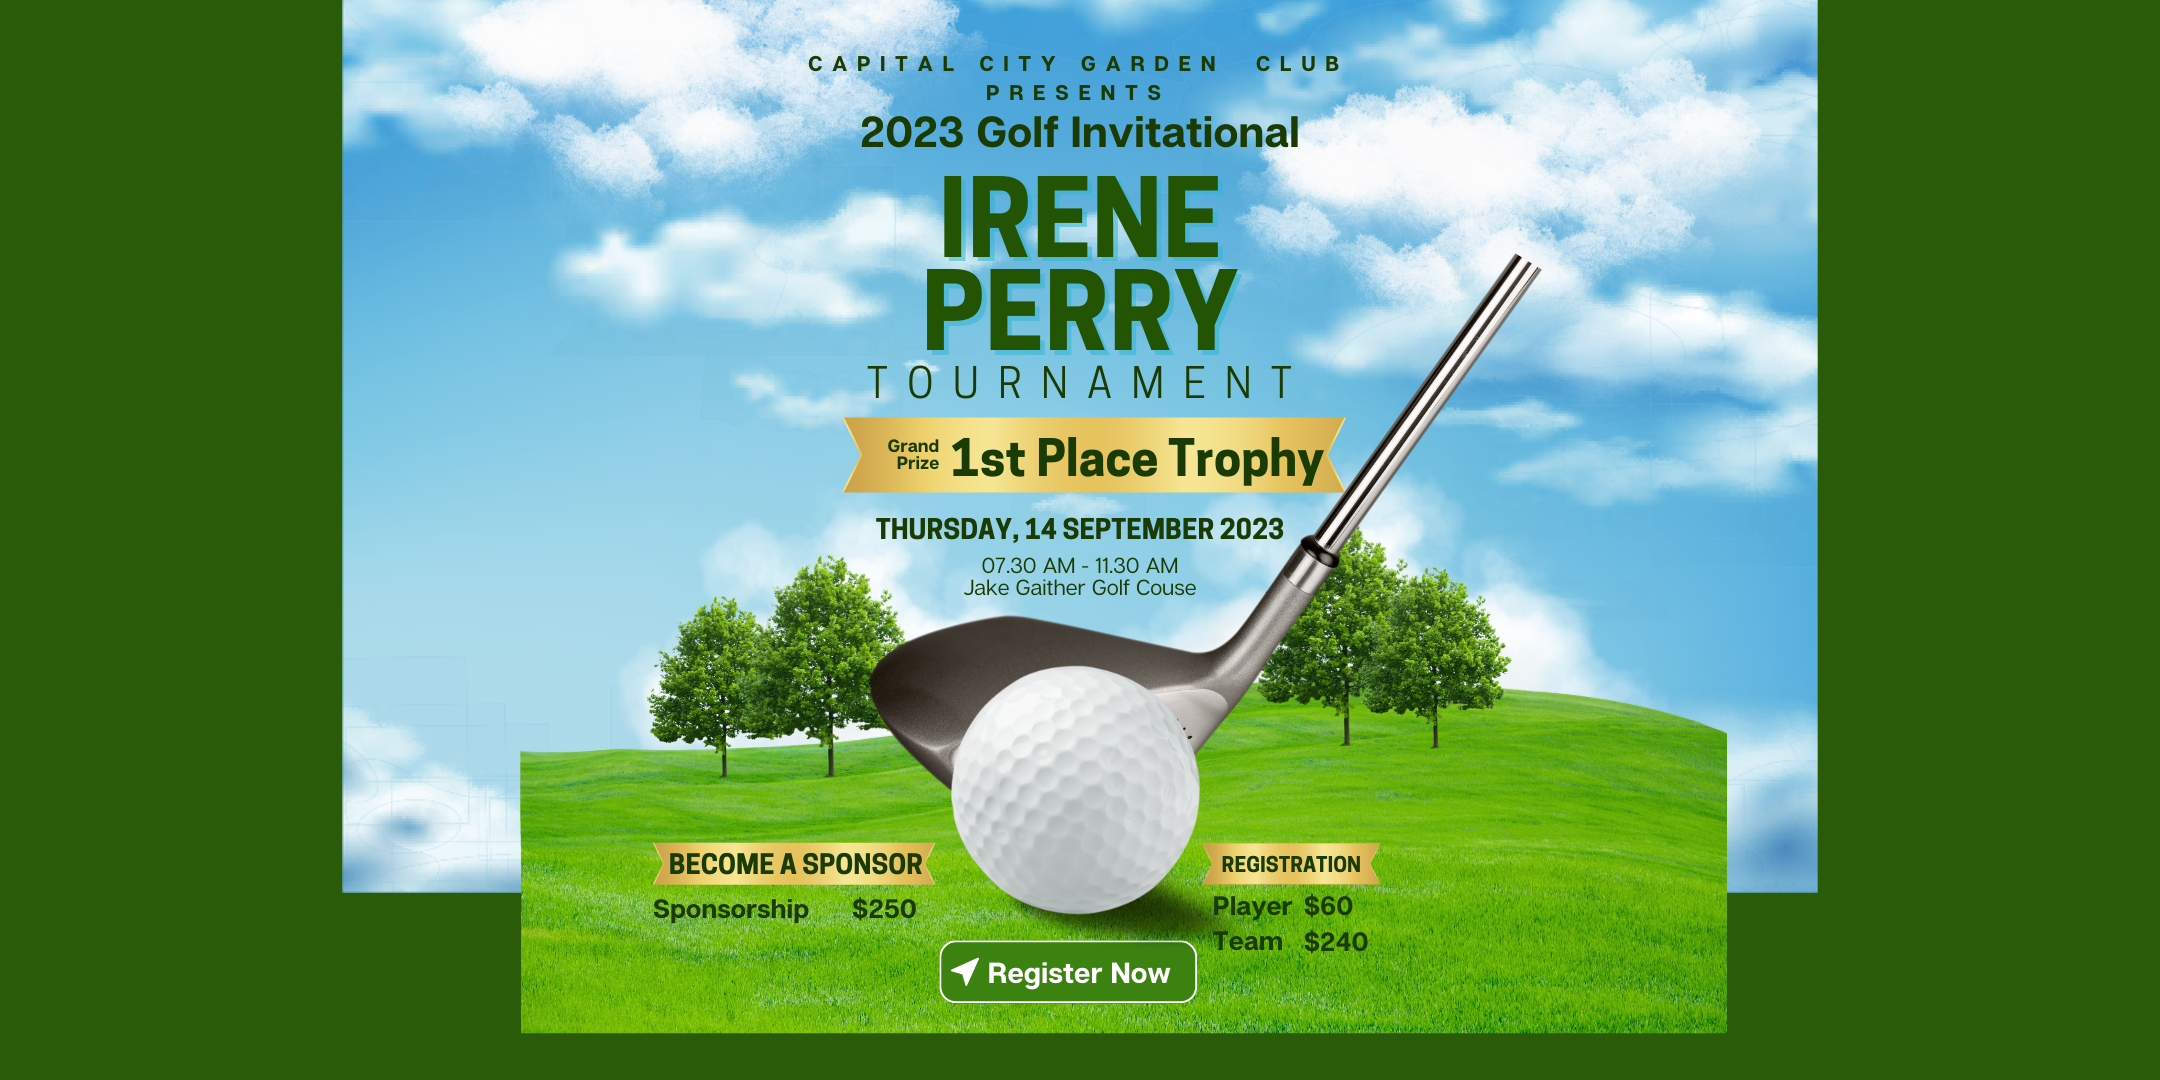 The Irene Perry Invitational Golf Tournament